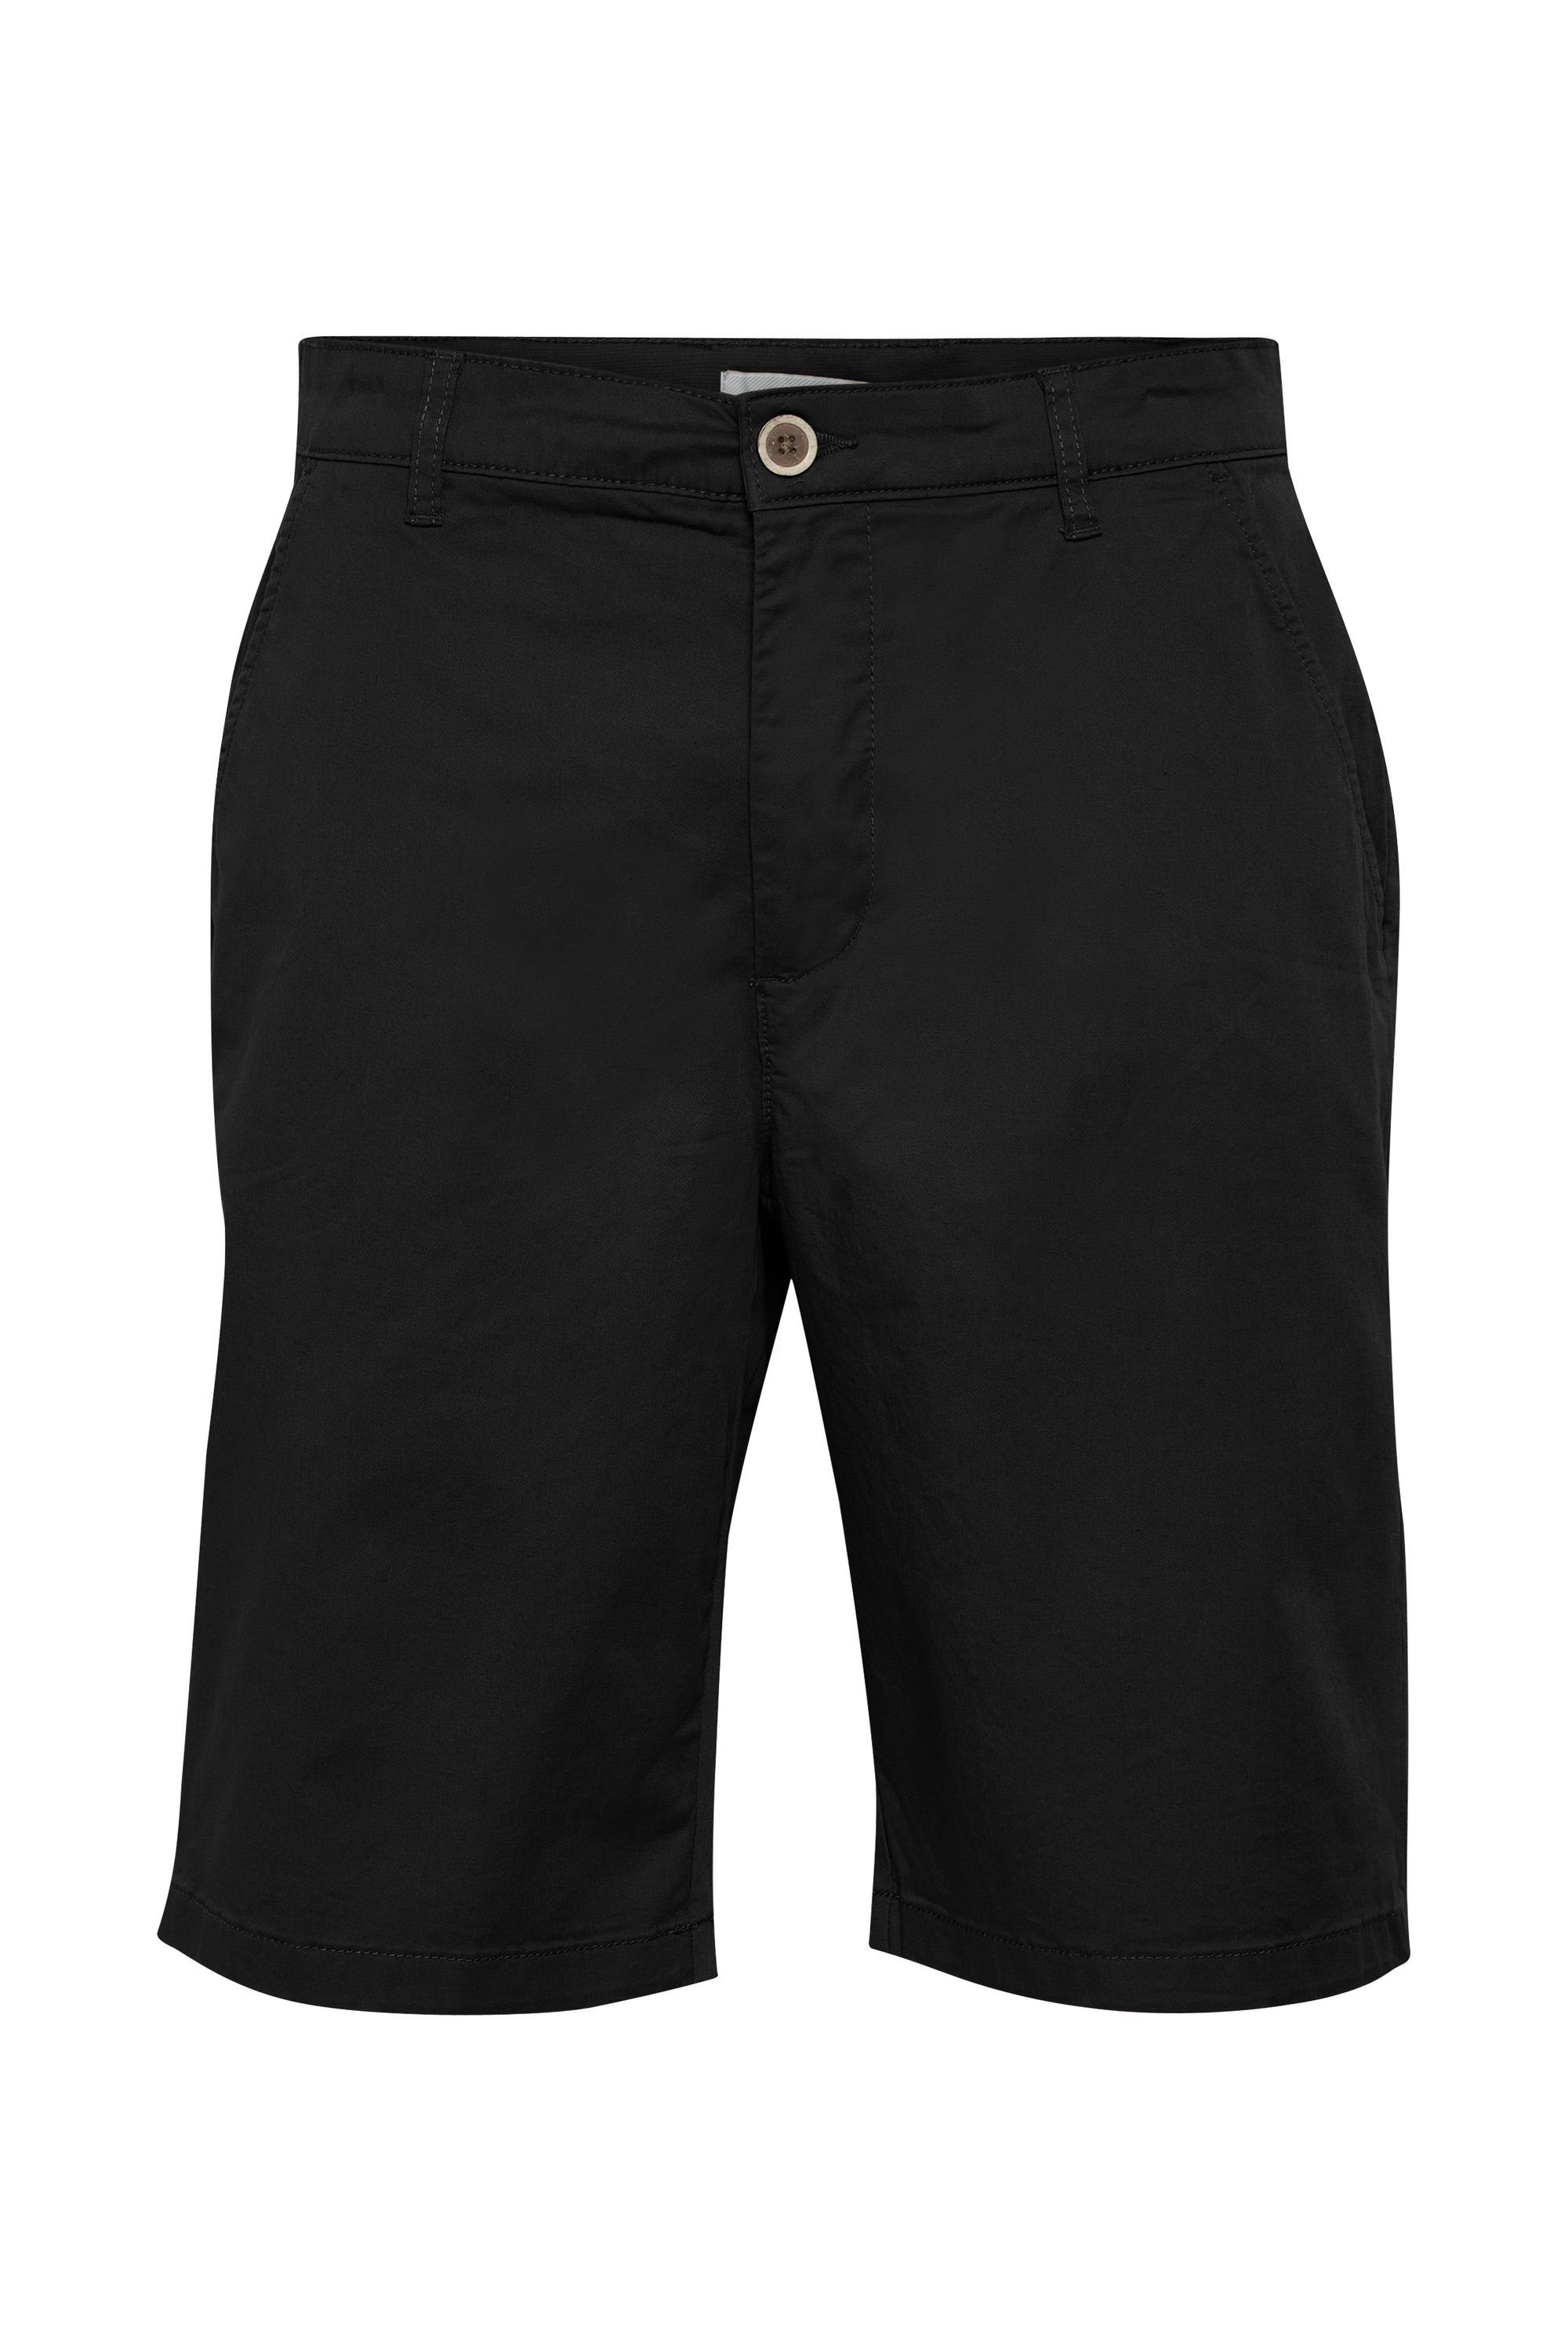 Black !Solid Shorts (194008) - SHO SDBishop True 21106875